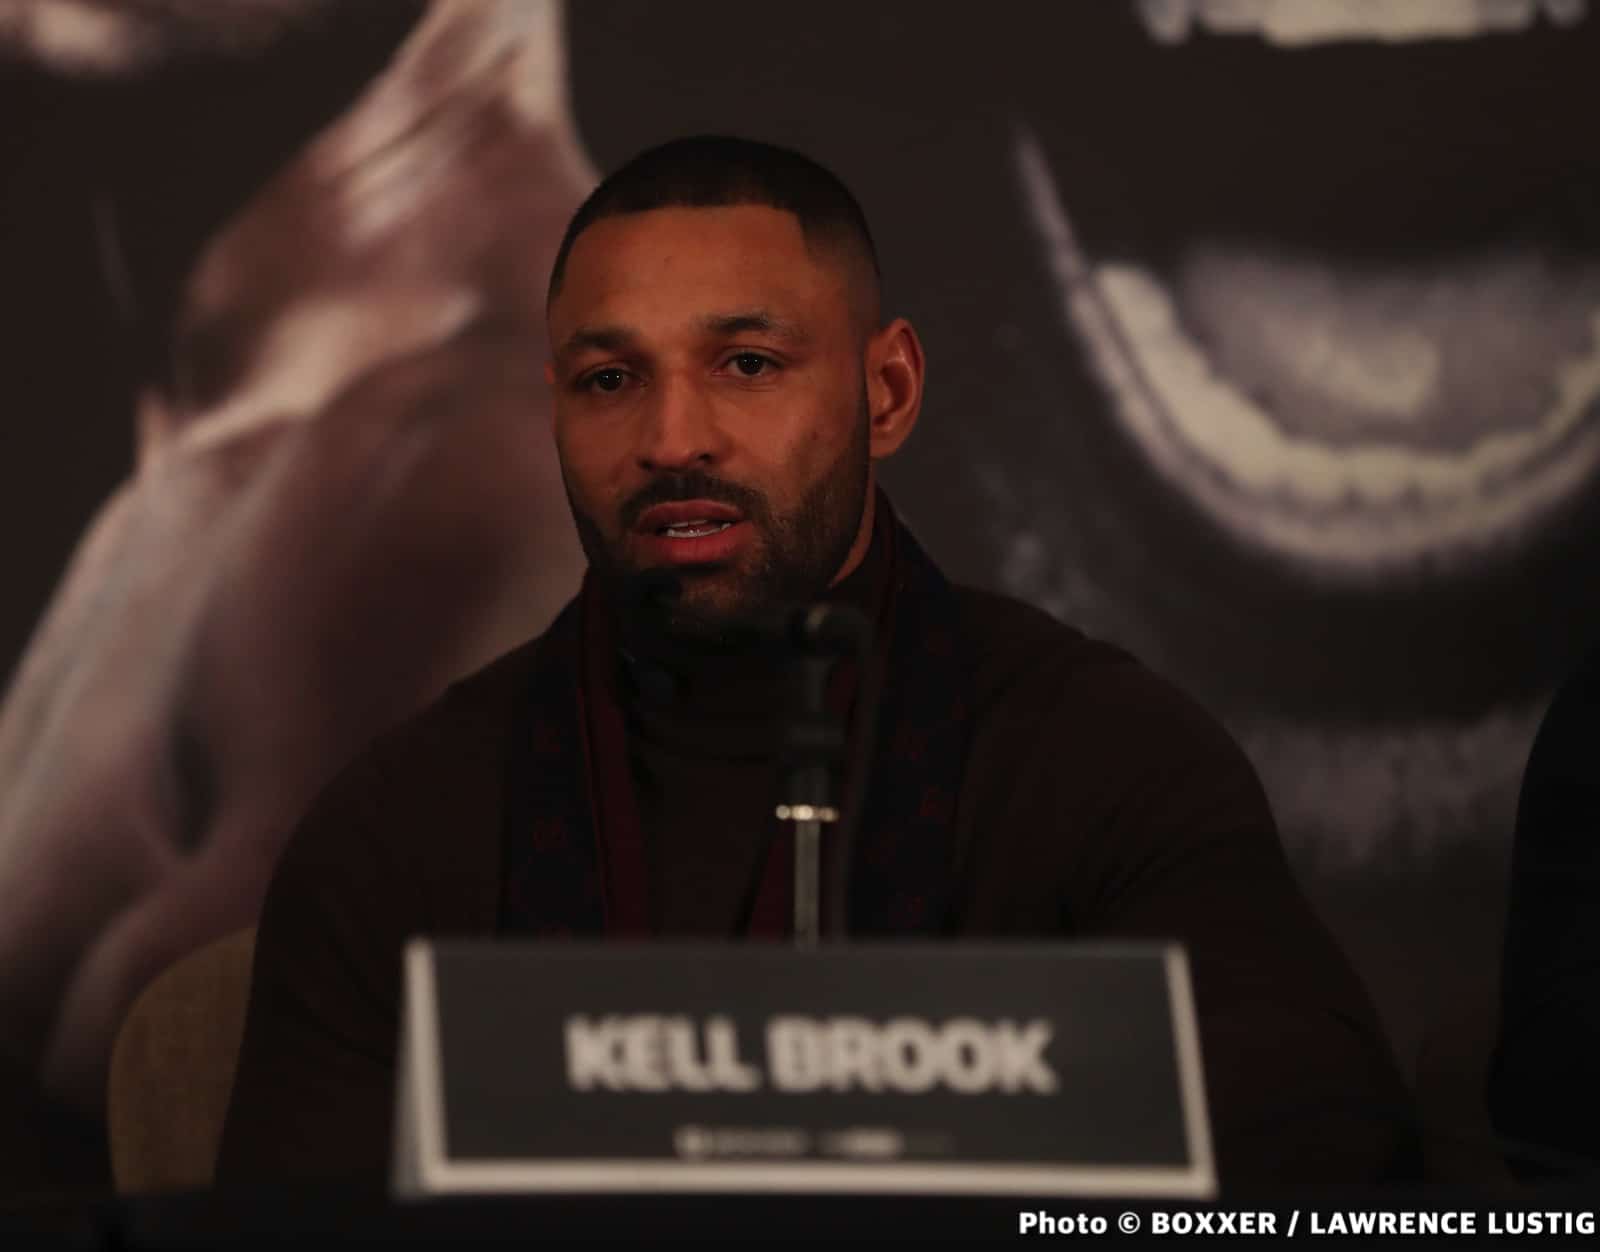 Image: Amir Khan says Kell Brook is "Half-broken," and he'll send him into retirement